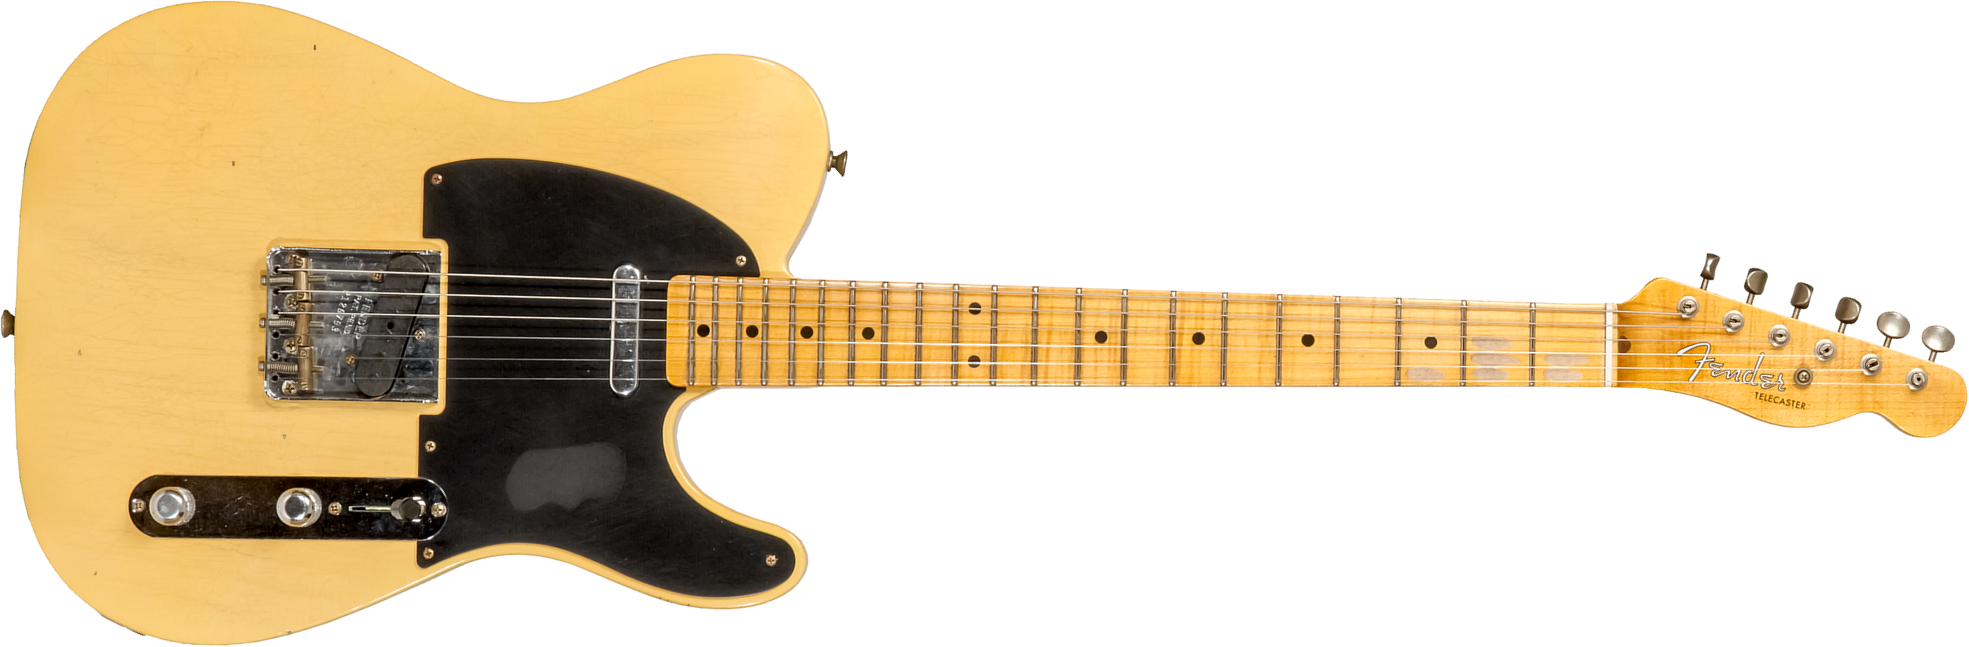 Fender Custom Shop Tele 1953 2s Ht Mn #r126793 - Journeyman Relic Aged Nocaster Blonde - Guitarra eléctrica con forma de tel - Main picture